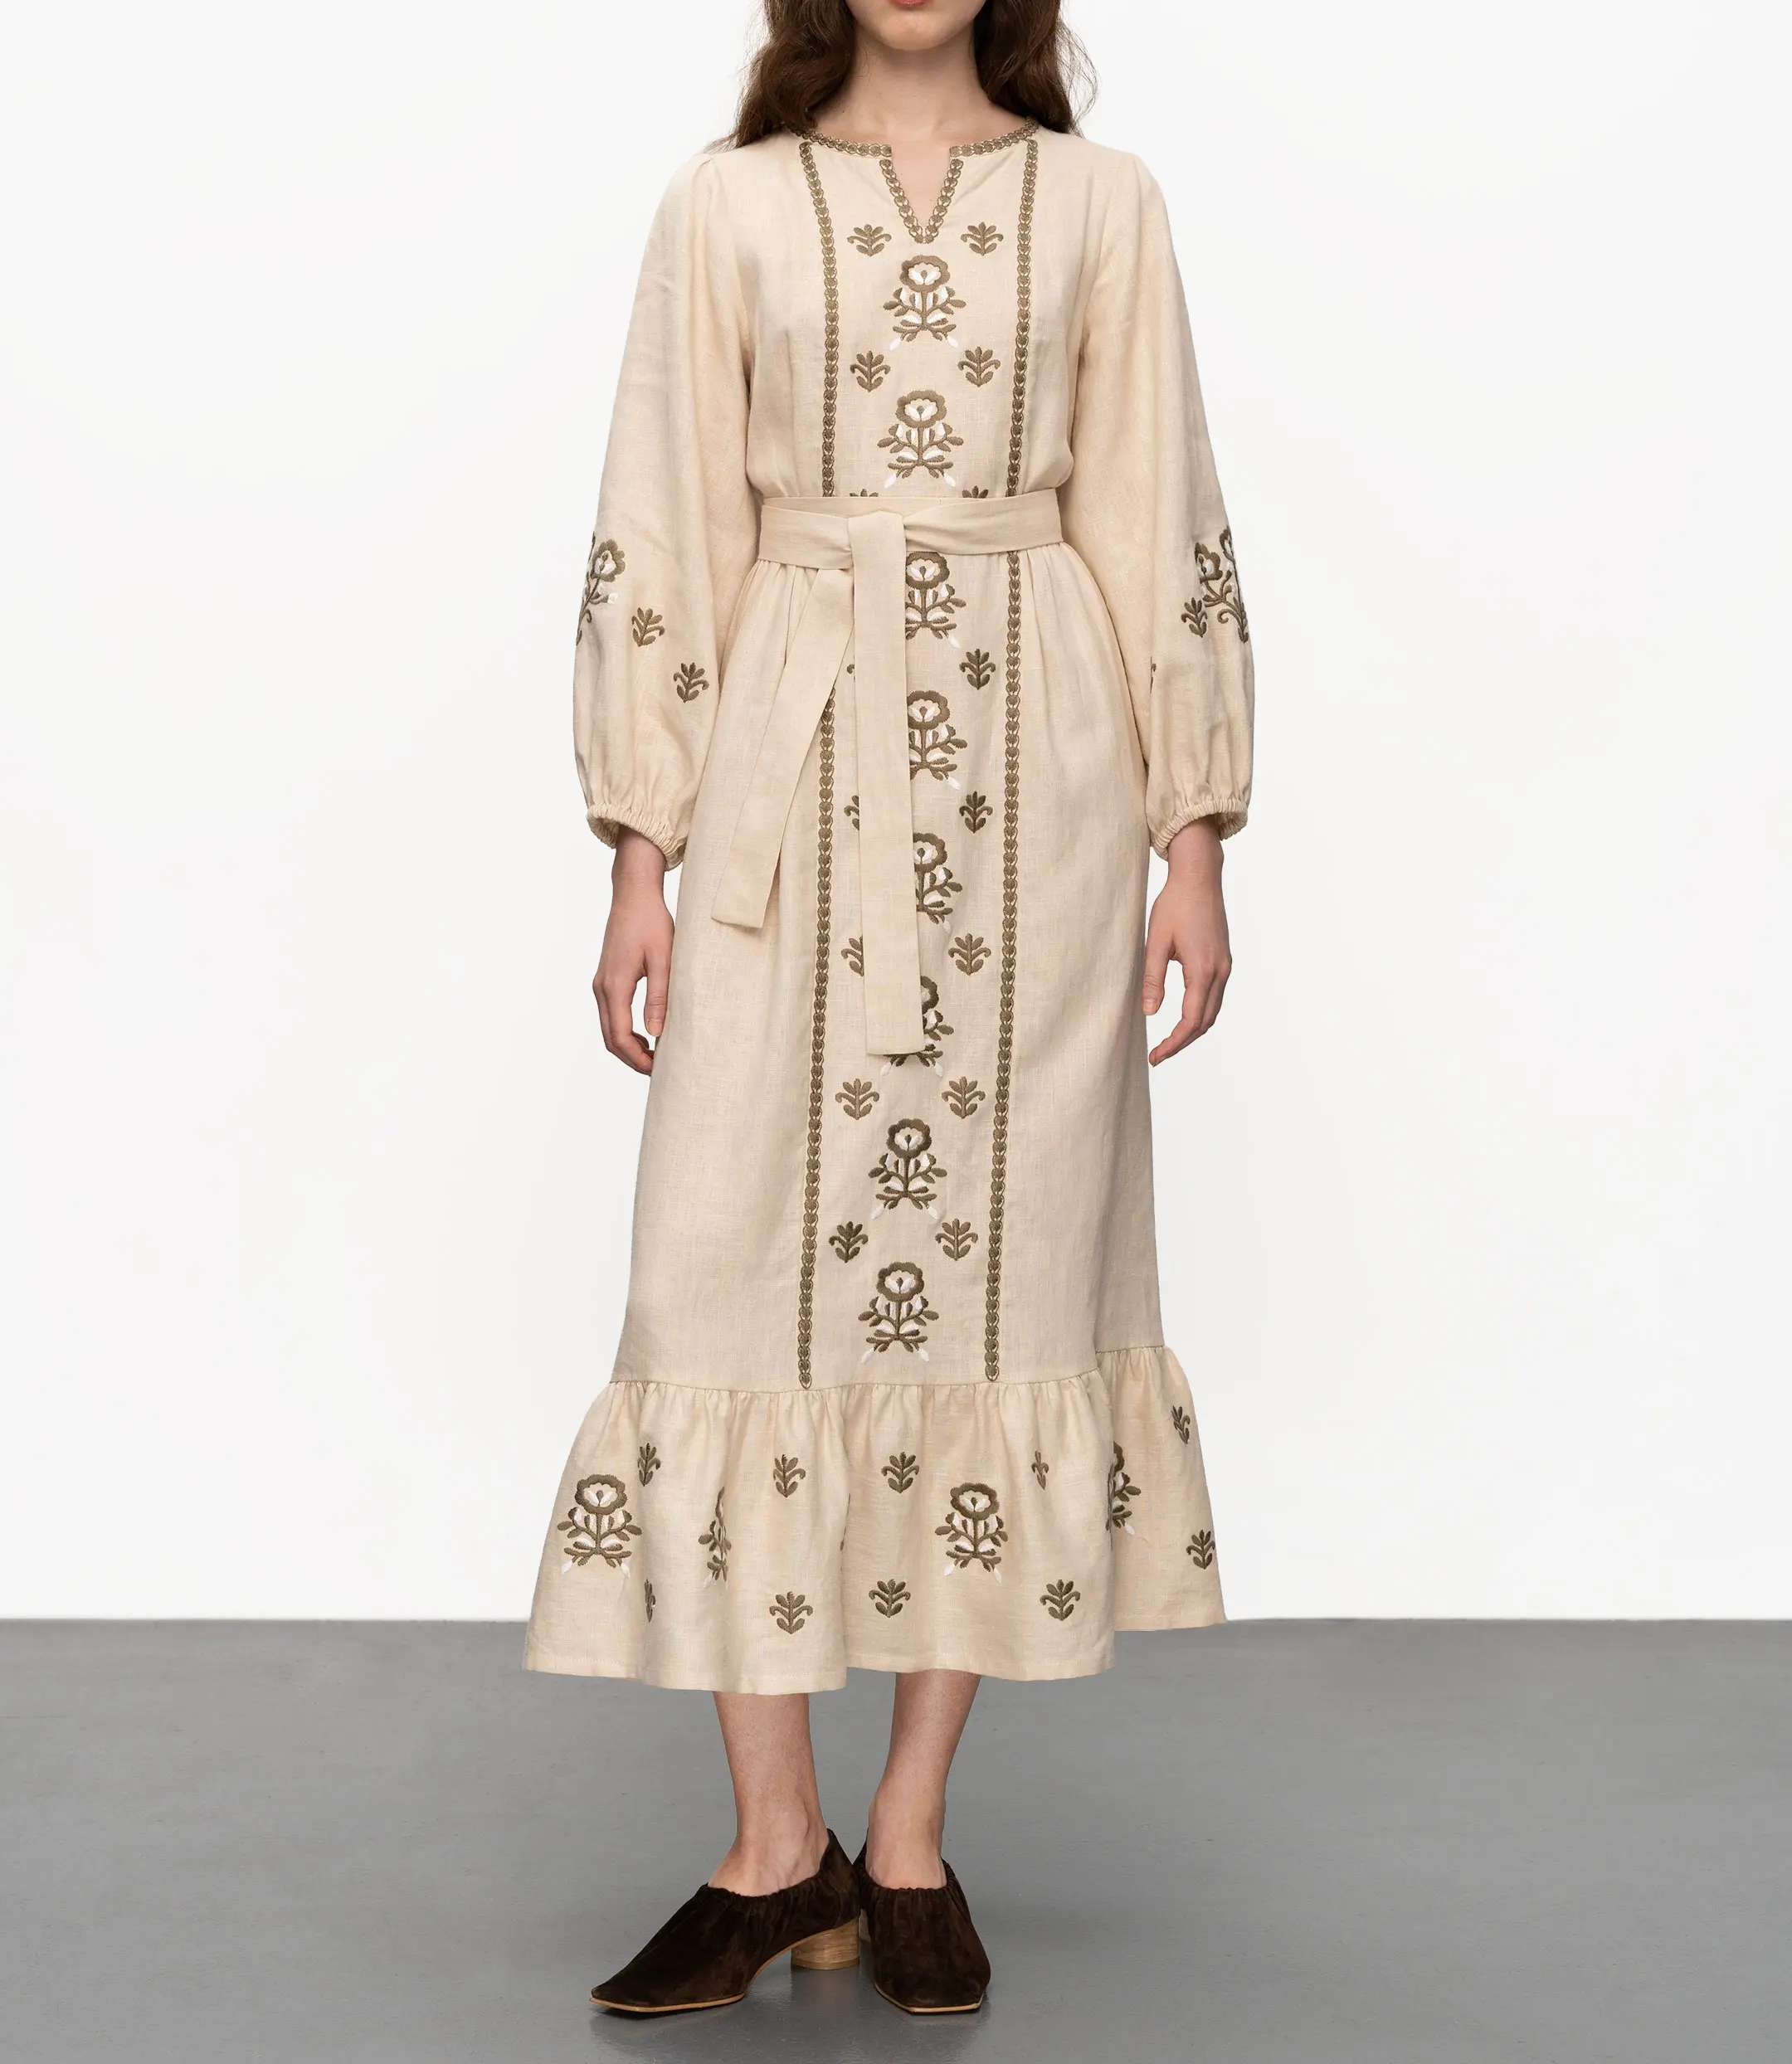 Hot Sell Lady's Embroidered Linen Cotton Casual Ruffle Hem Long Women Maxi Dress